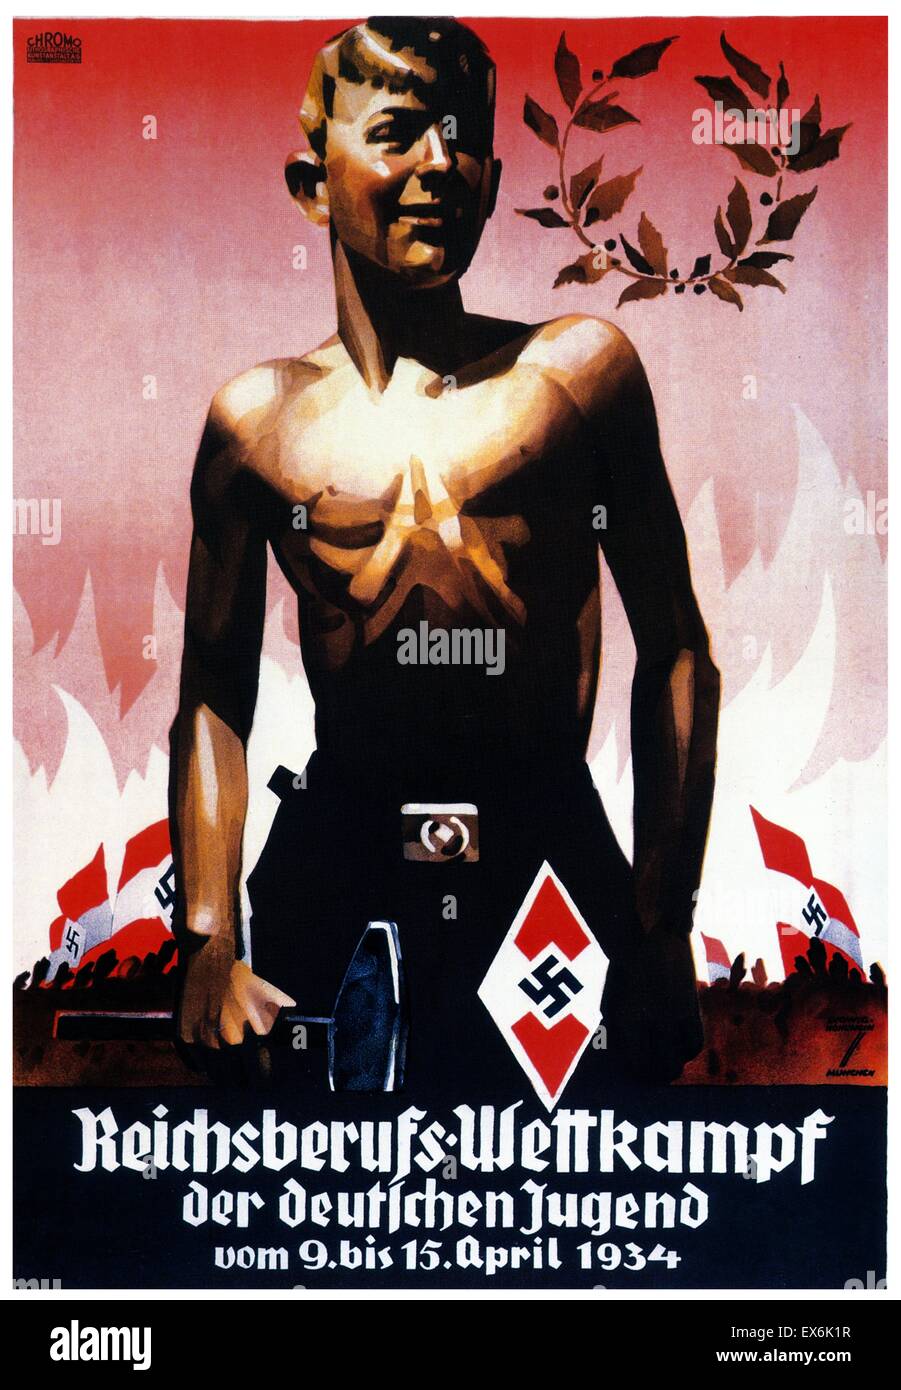 Hitler youth poster, Nazi Germany 1934 Stock Photo